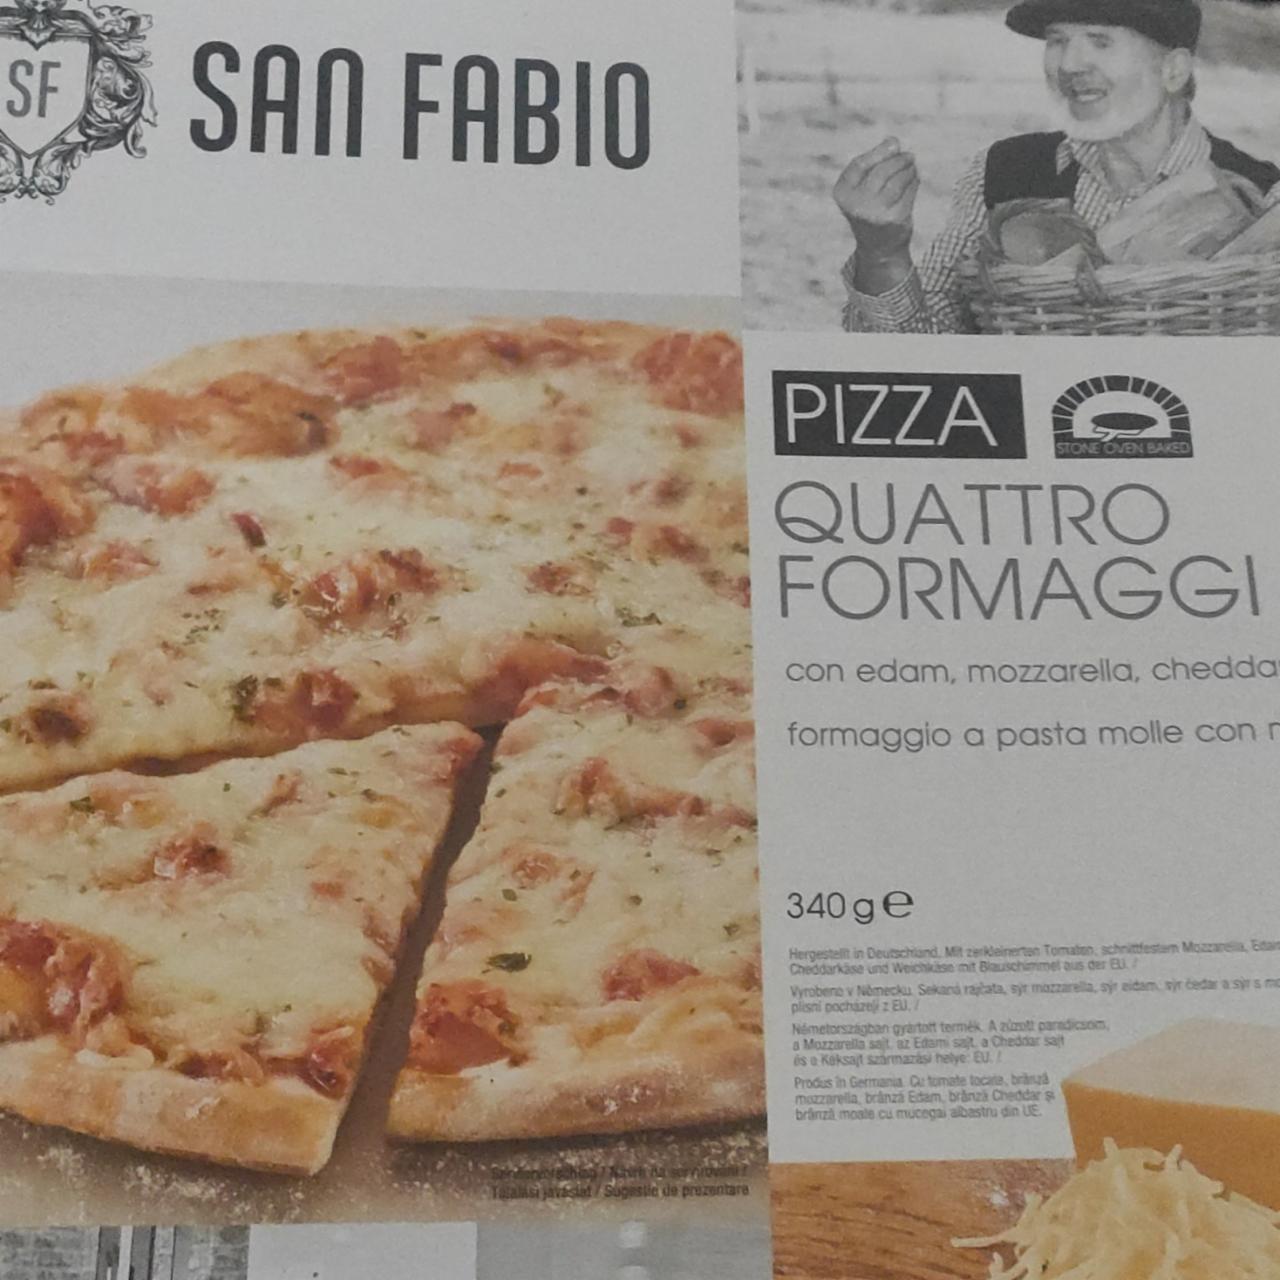 Фото - Пицца Pizza Quattro formaggi San Fabio